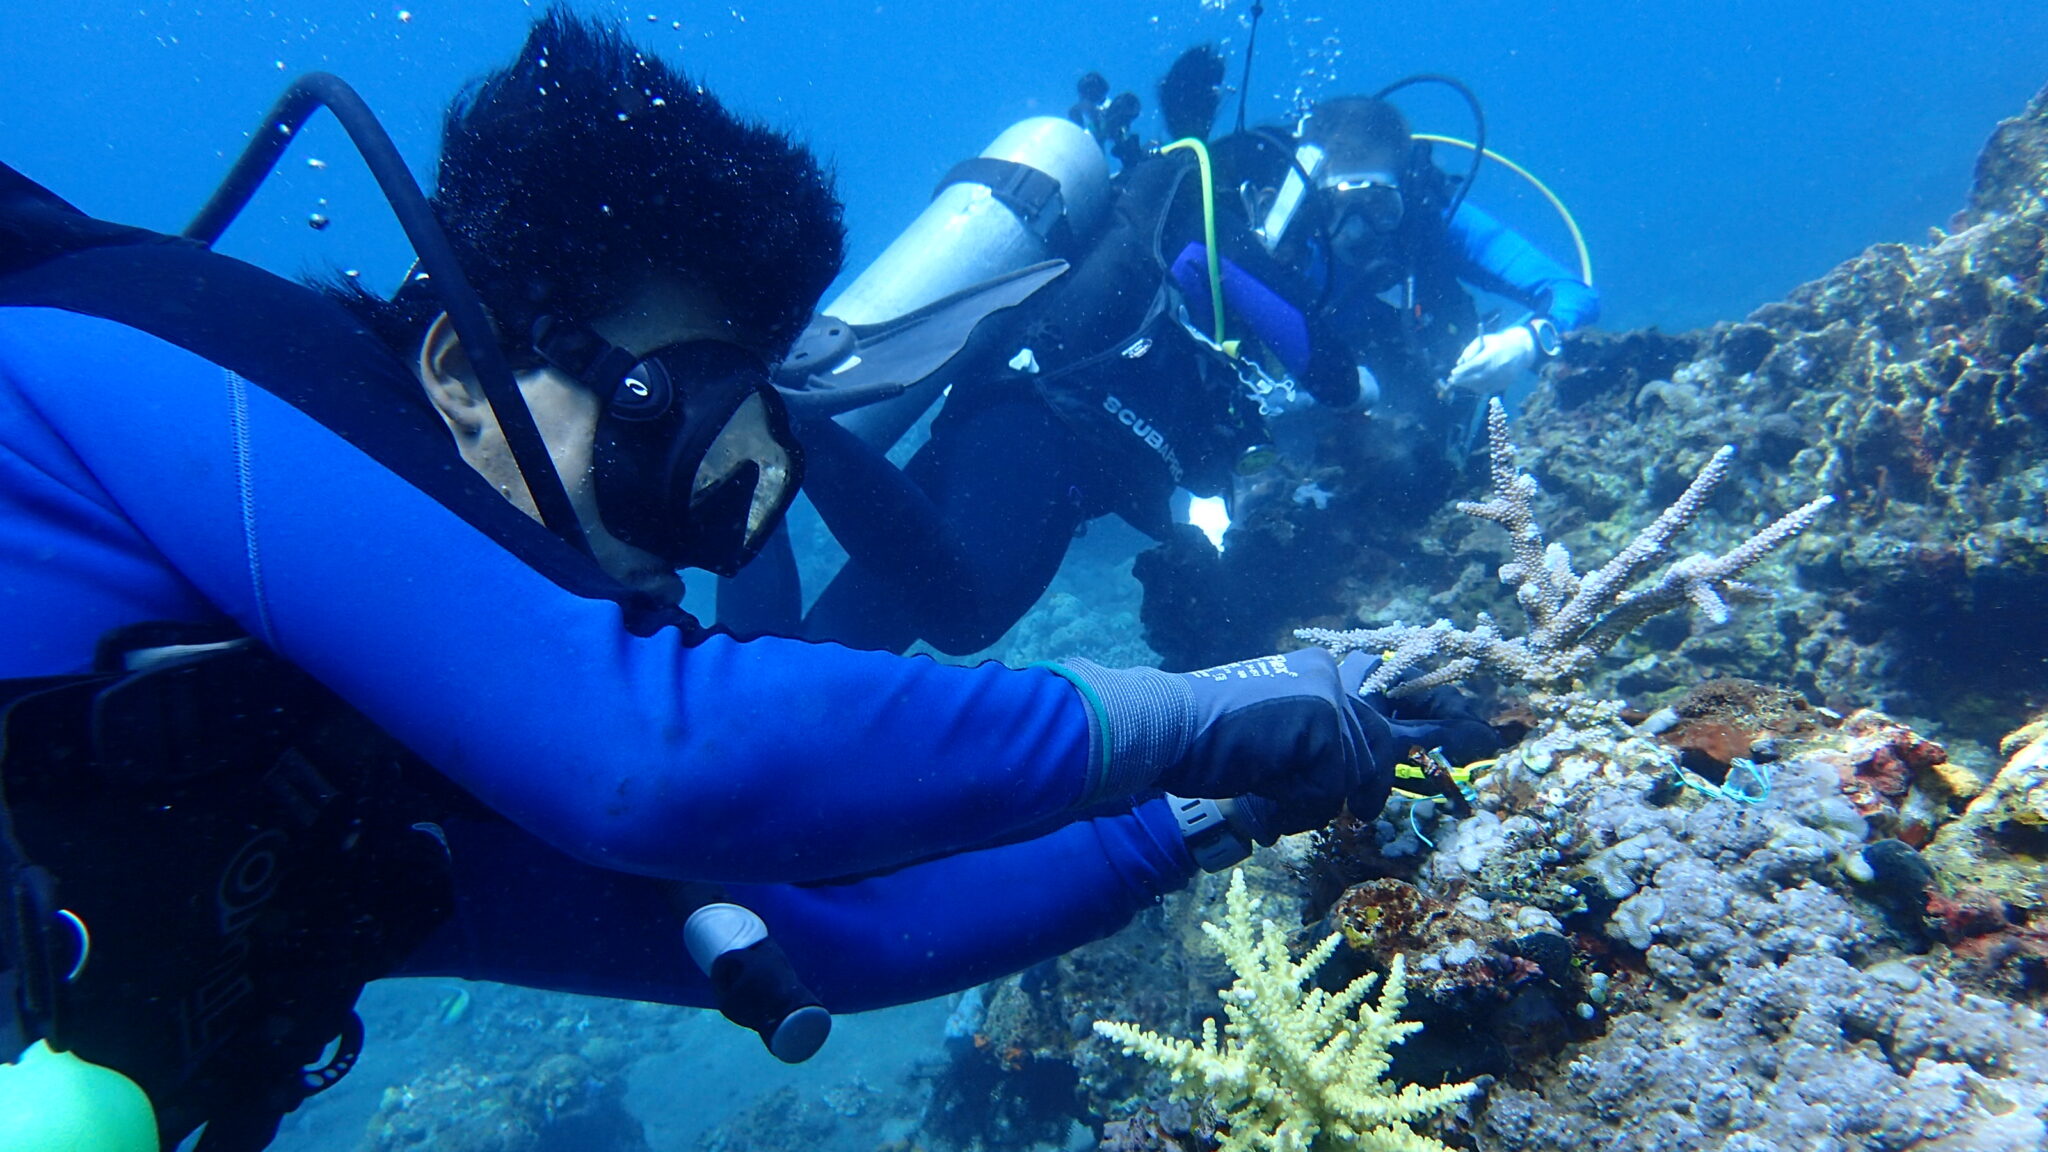 Sea Communities fazendo transplante de corais